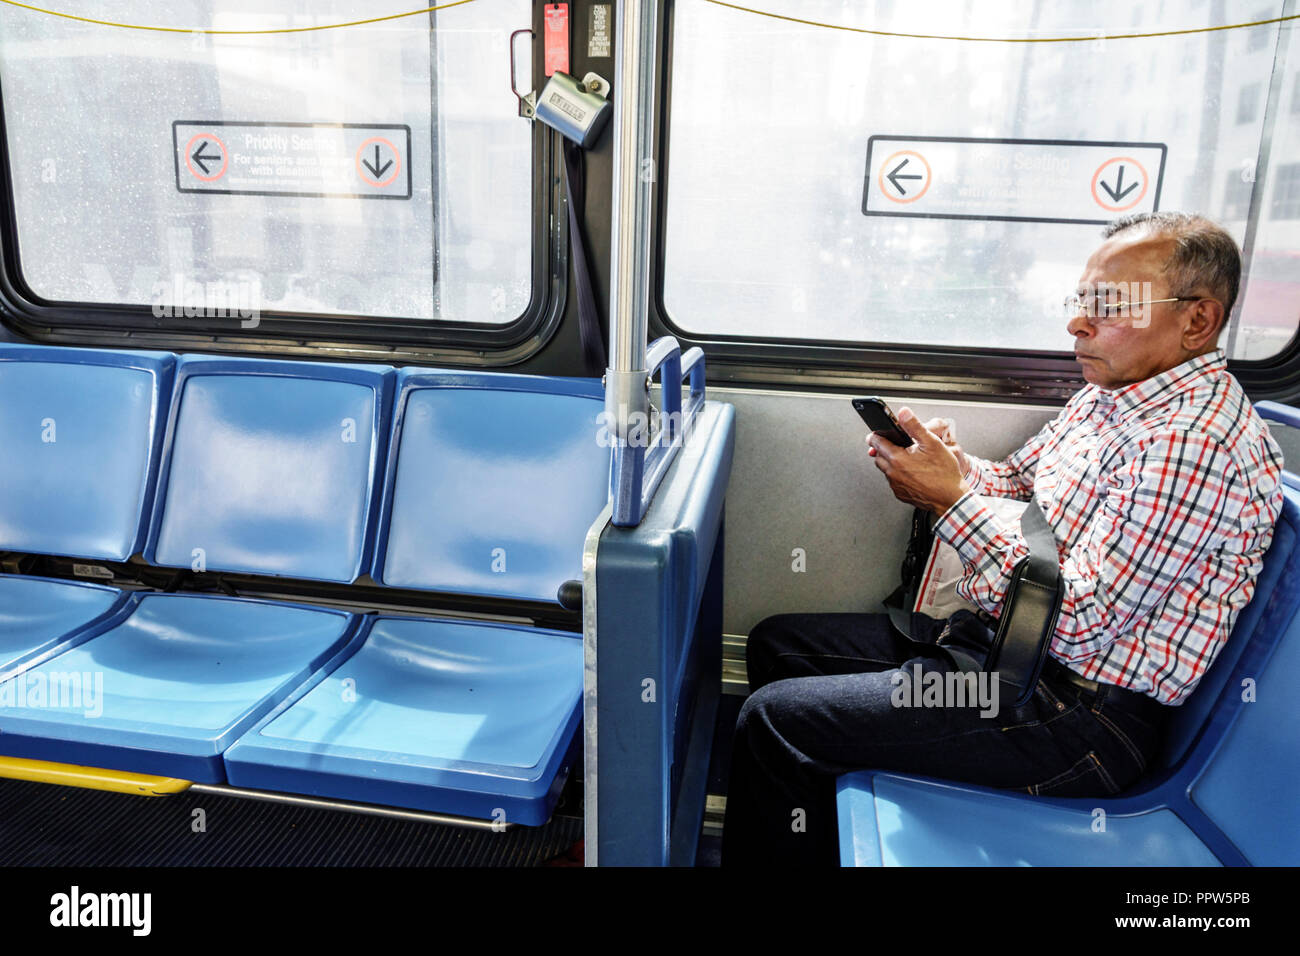 Miami Beach Florida,Miami-Dade Metrobus,inside onboard,Hispanic man men male,rider passenger,FL180527012 Stock Photo